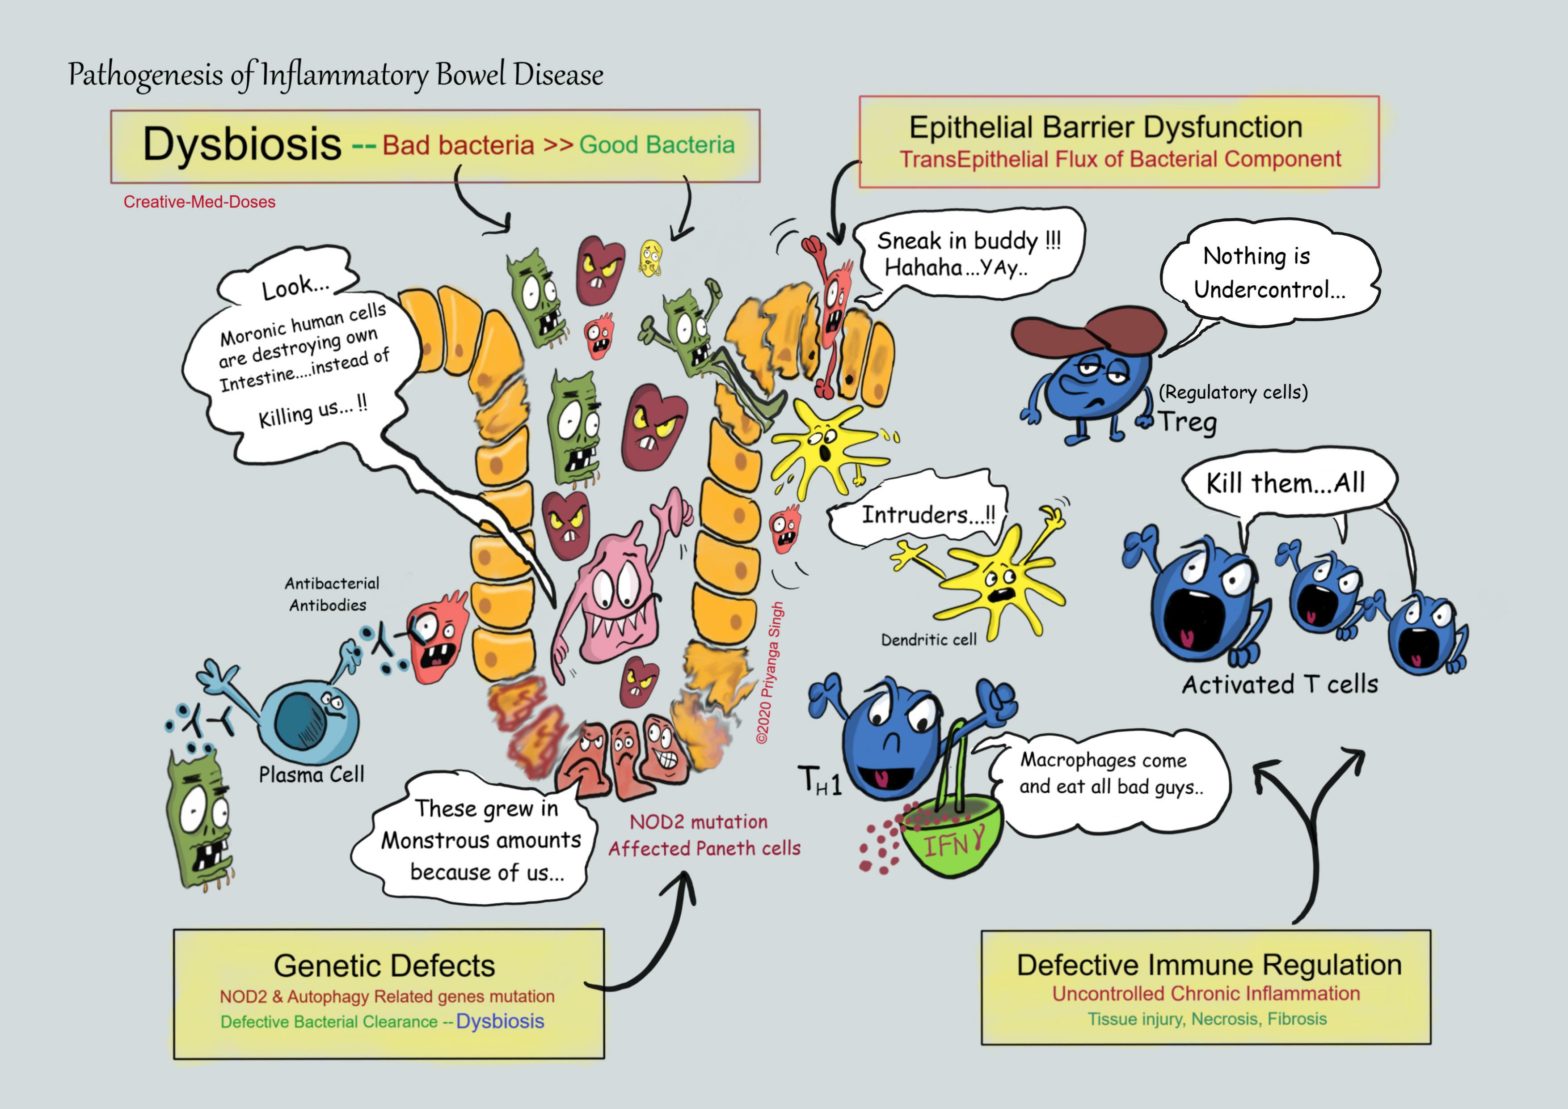 Inflammatory Bowel Disease (IBD): Pathogenesis